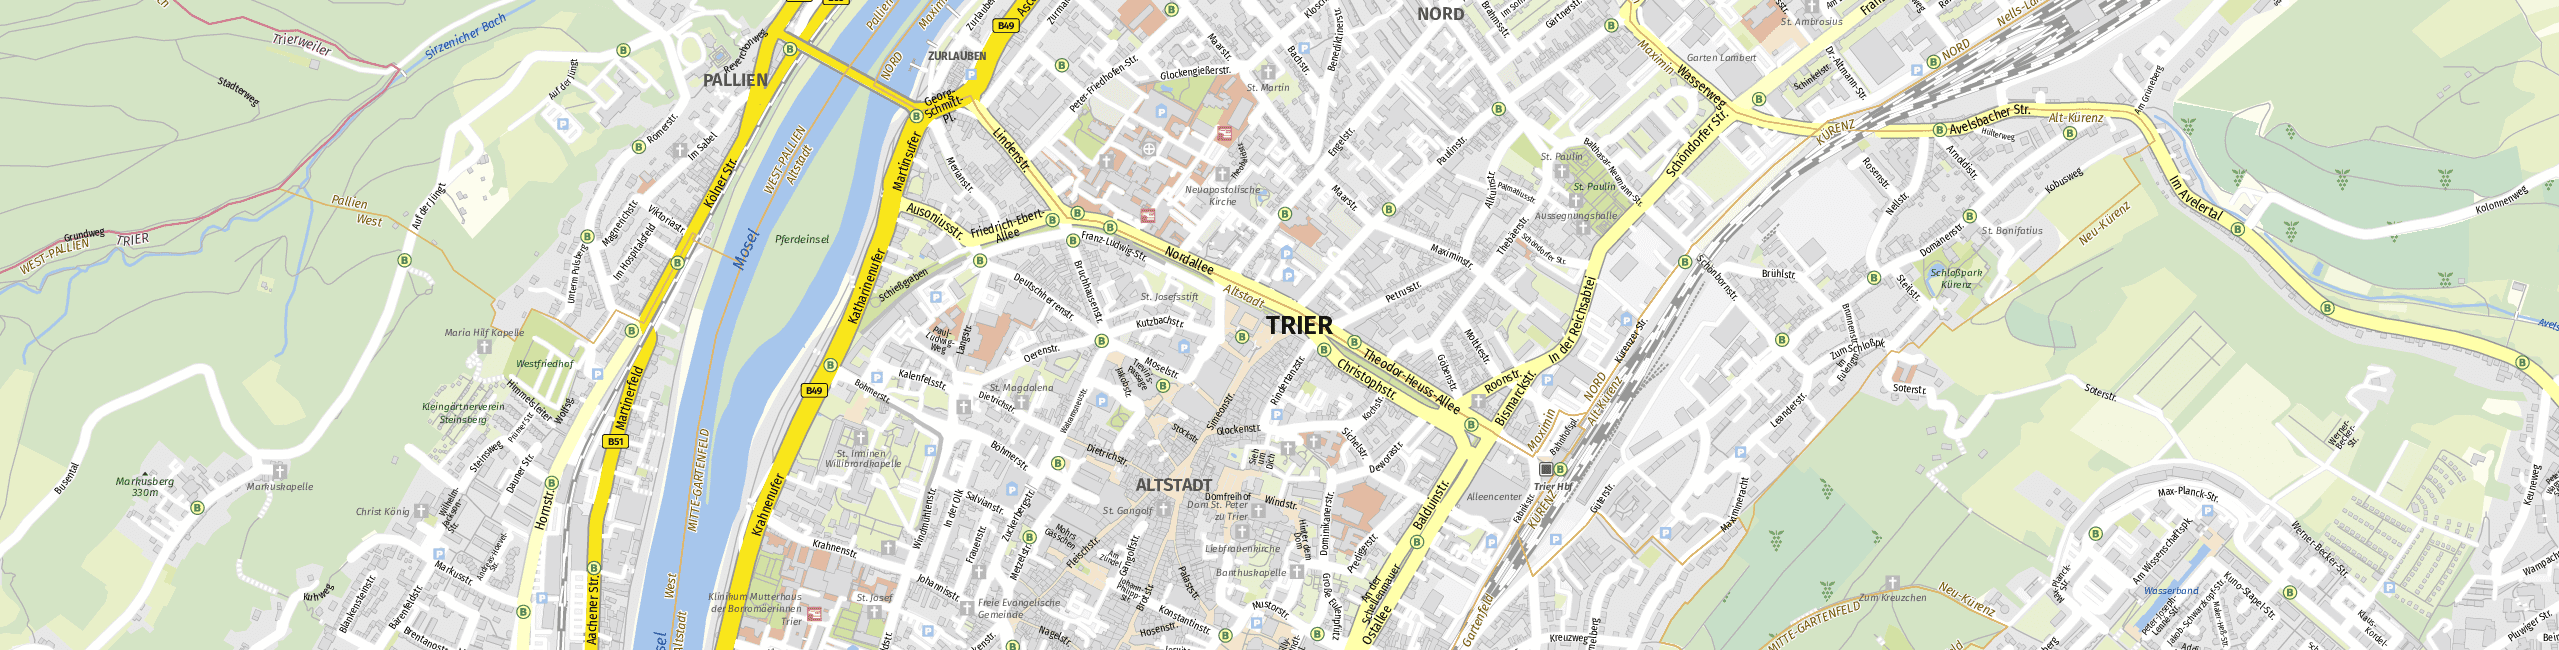 Stadtplan Trier zum Downloaden.